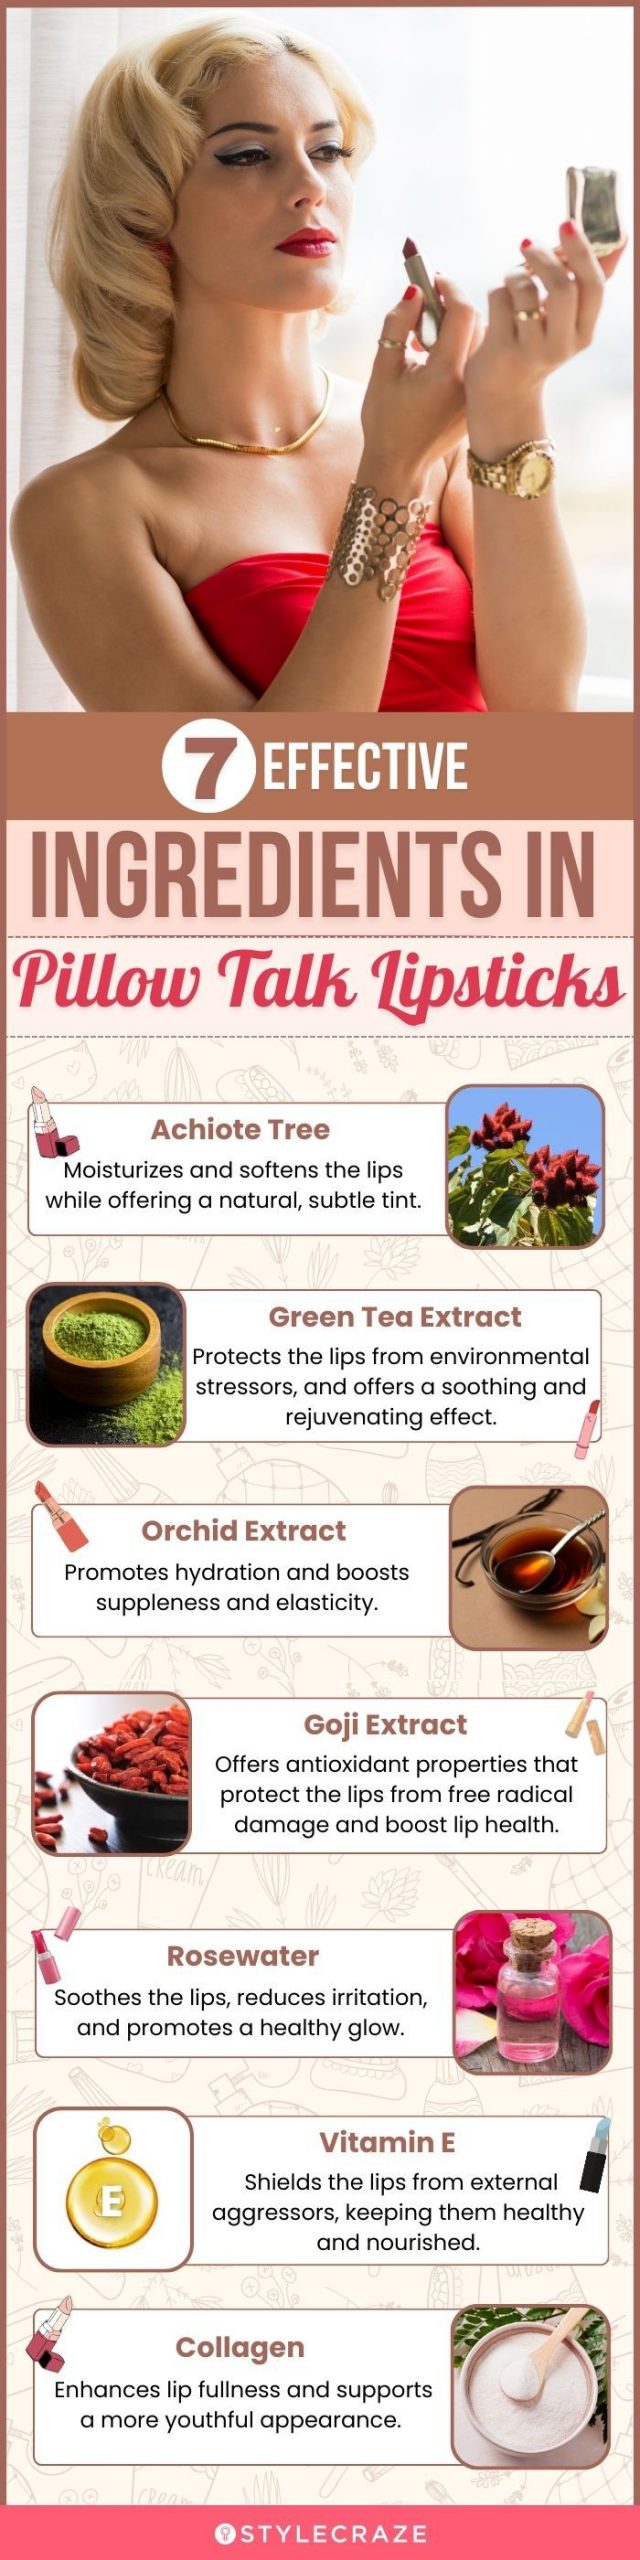 7 Effective Ingredients In Pillow Talk Lipsticks (infographic)